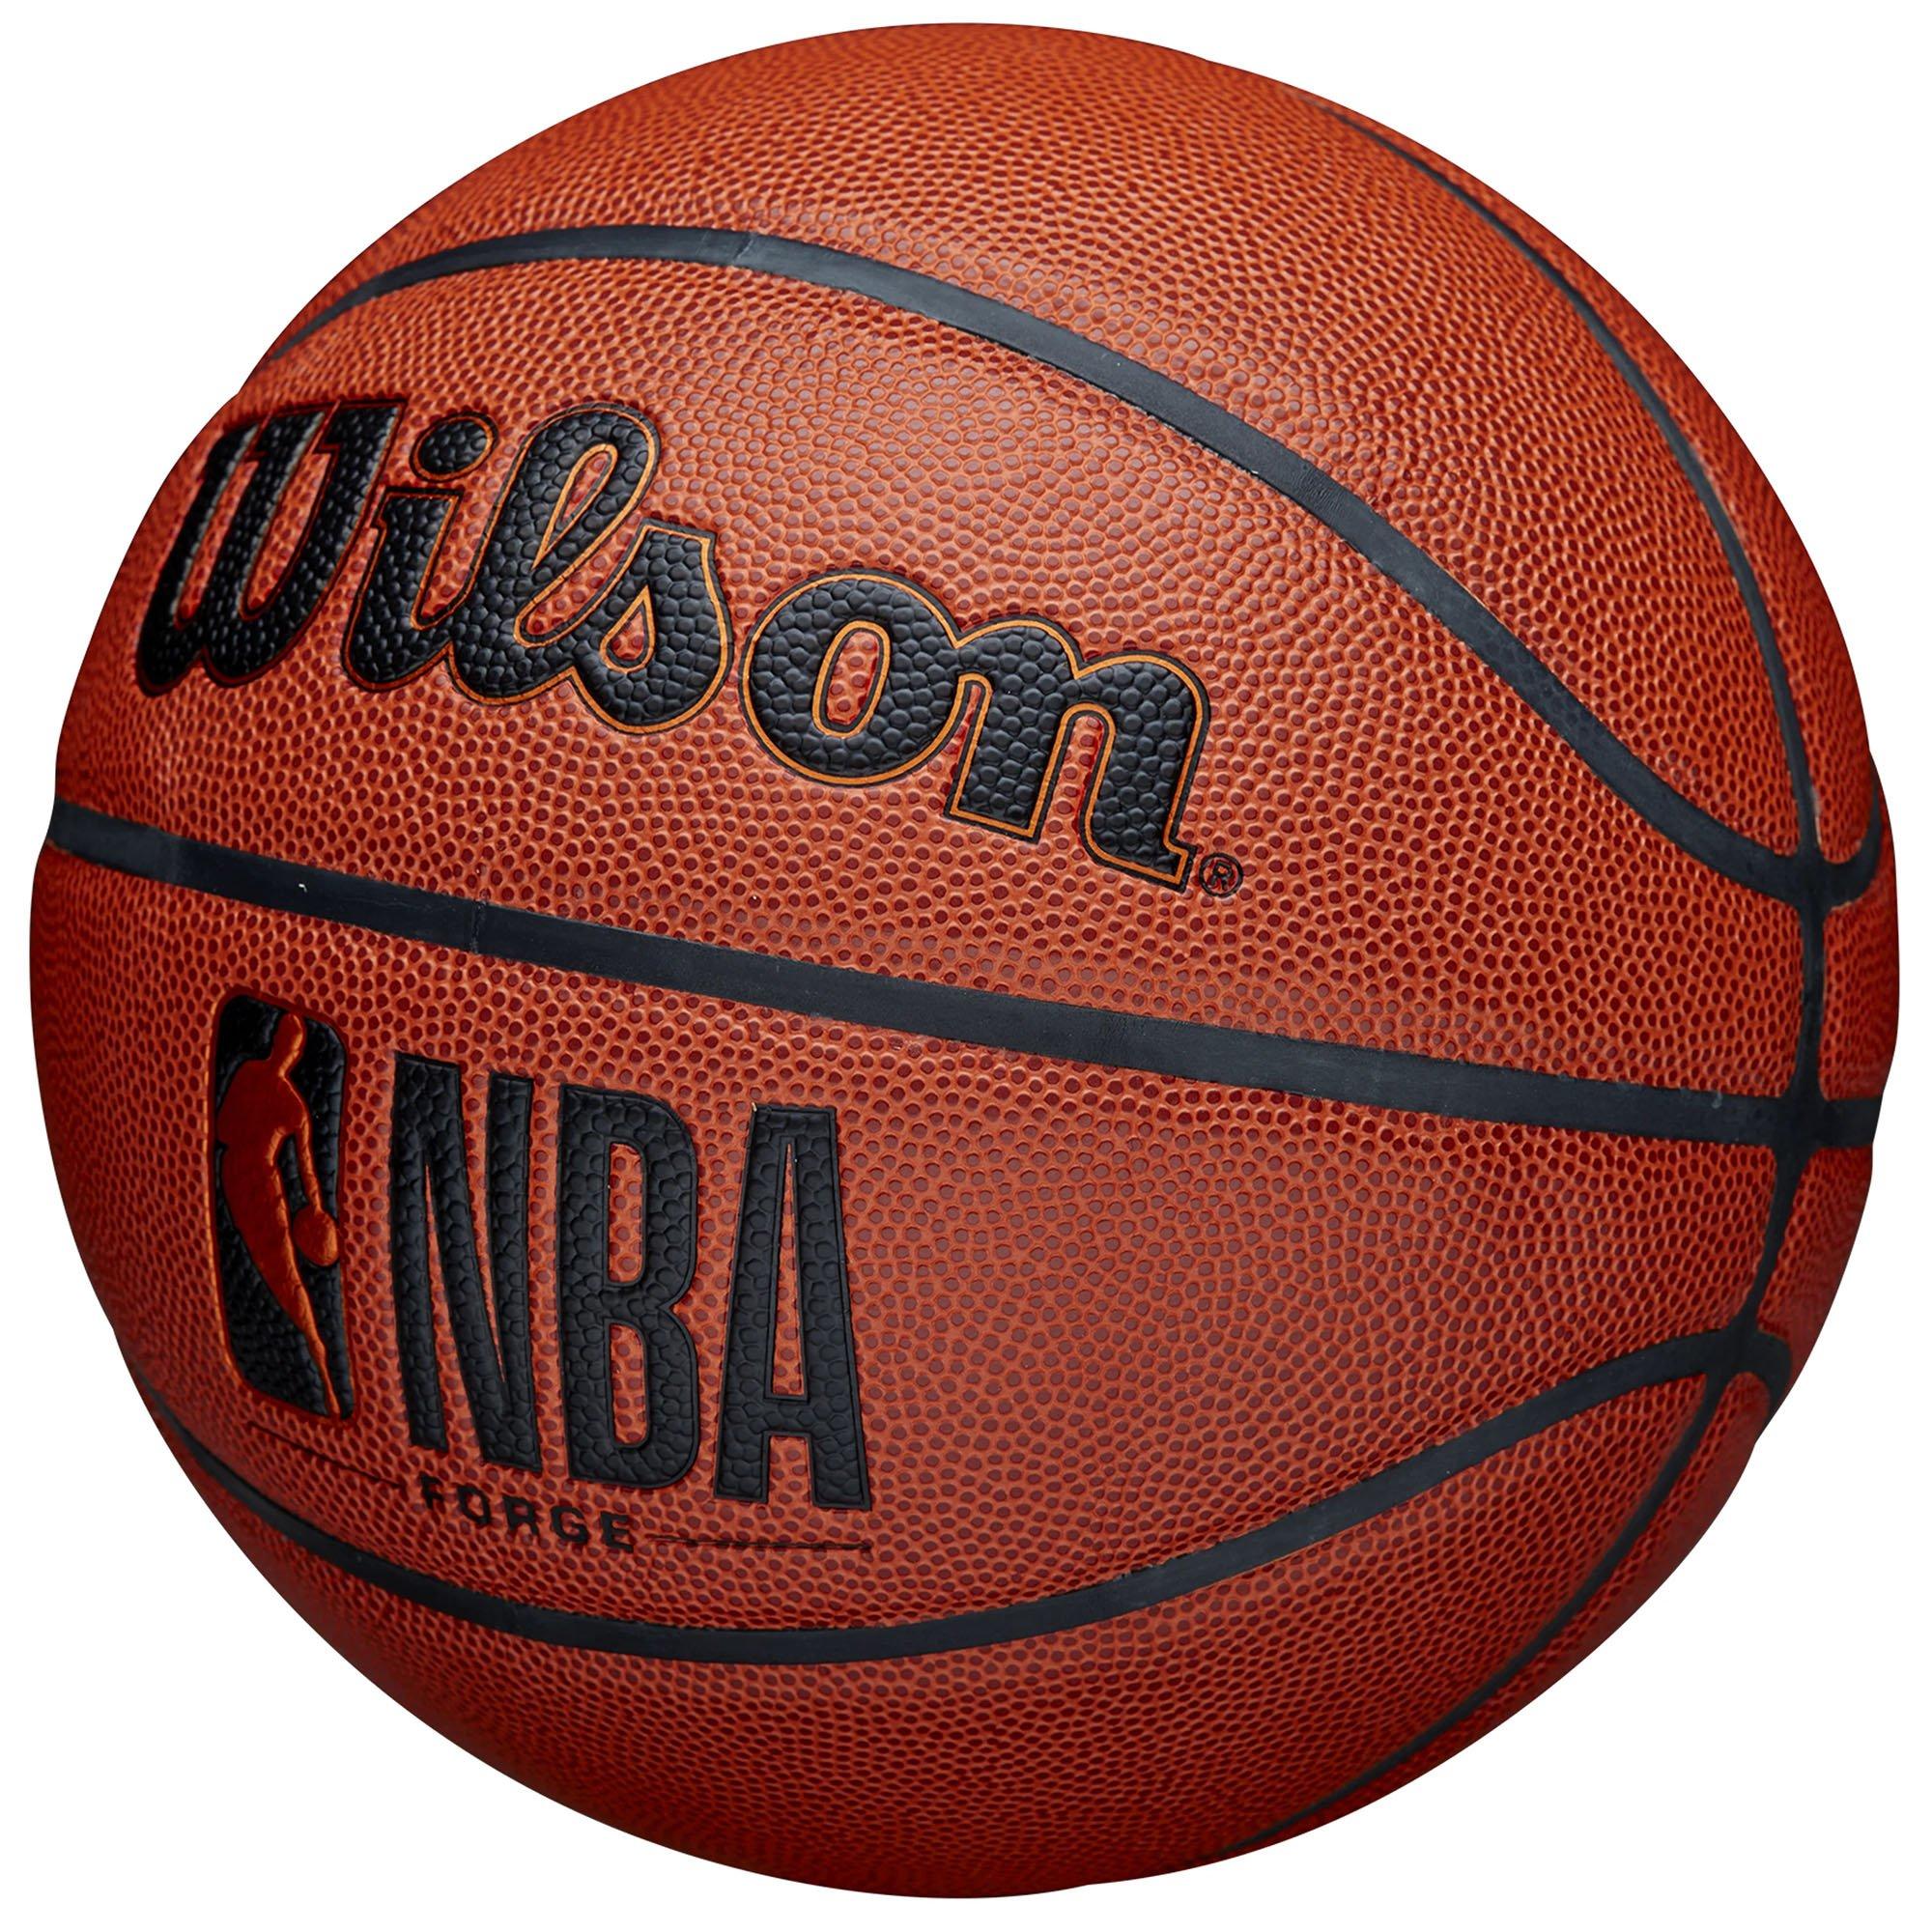 Wilson | Forge Basketball | Basketballs | Sports Direct MY